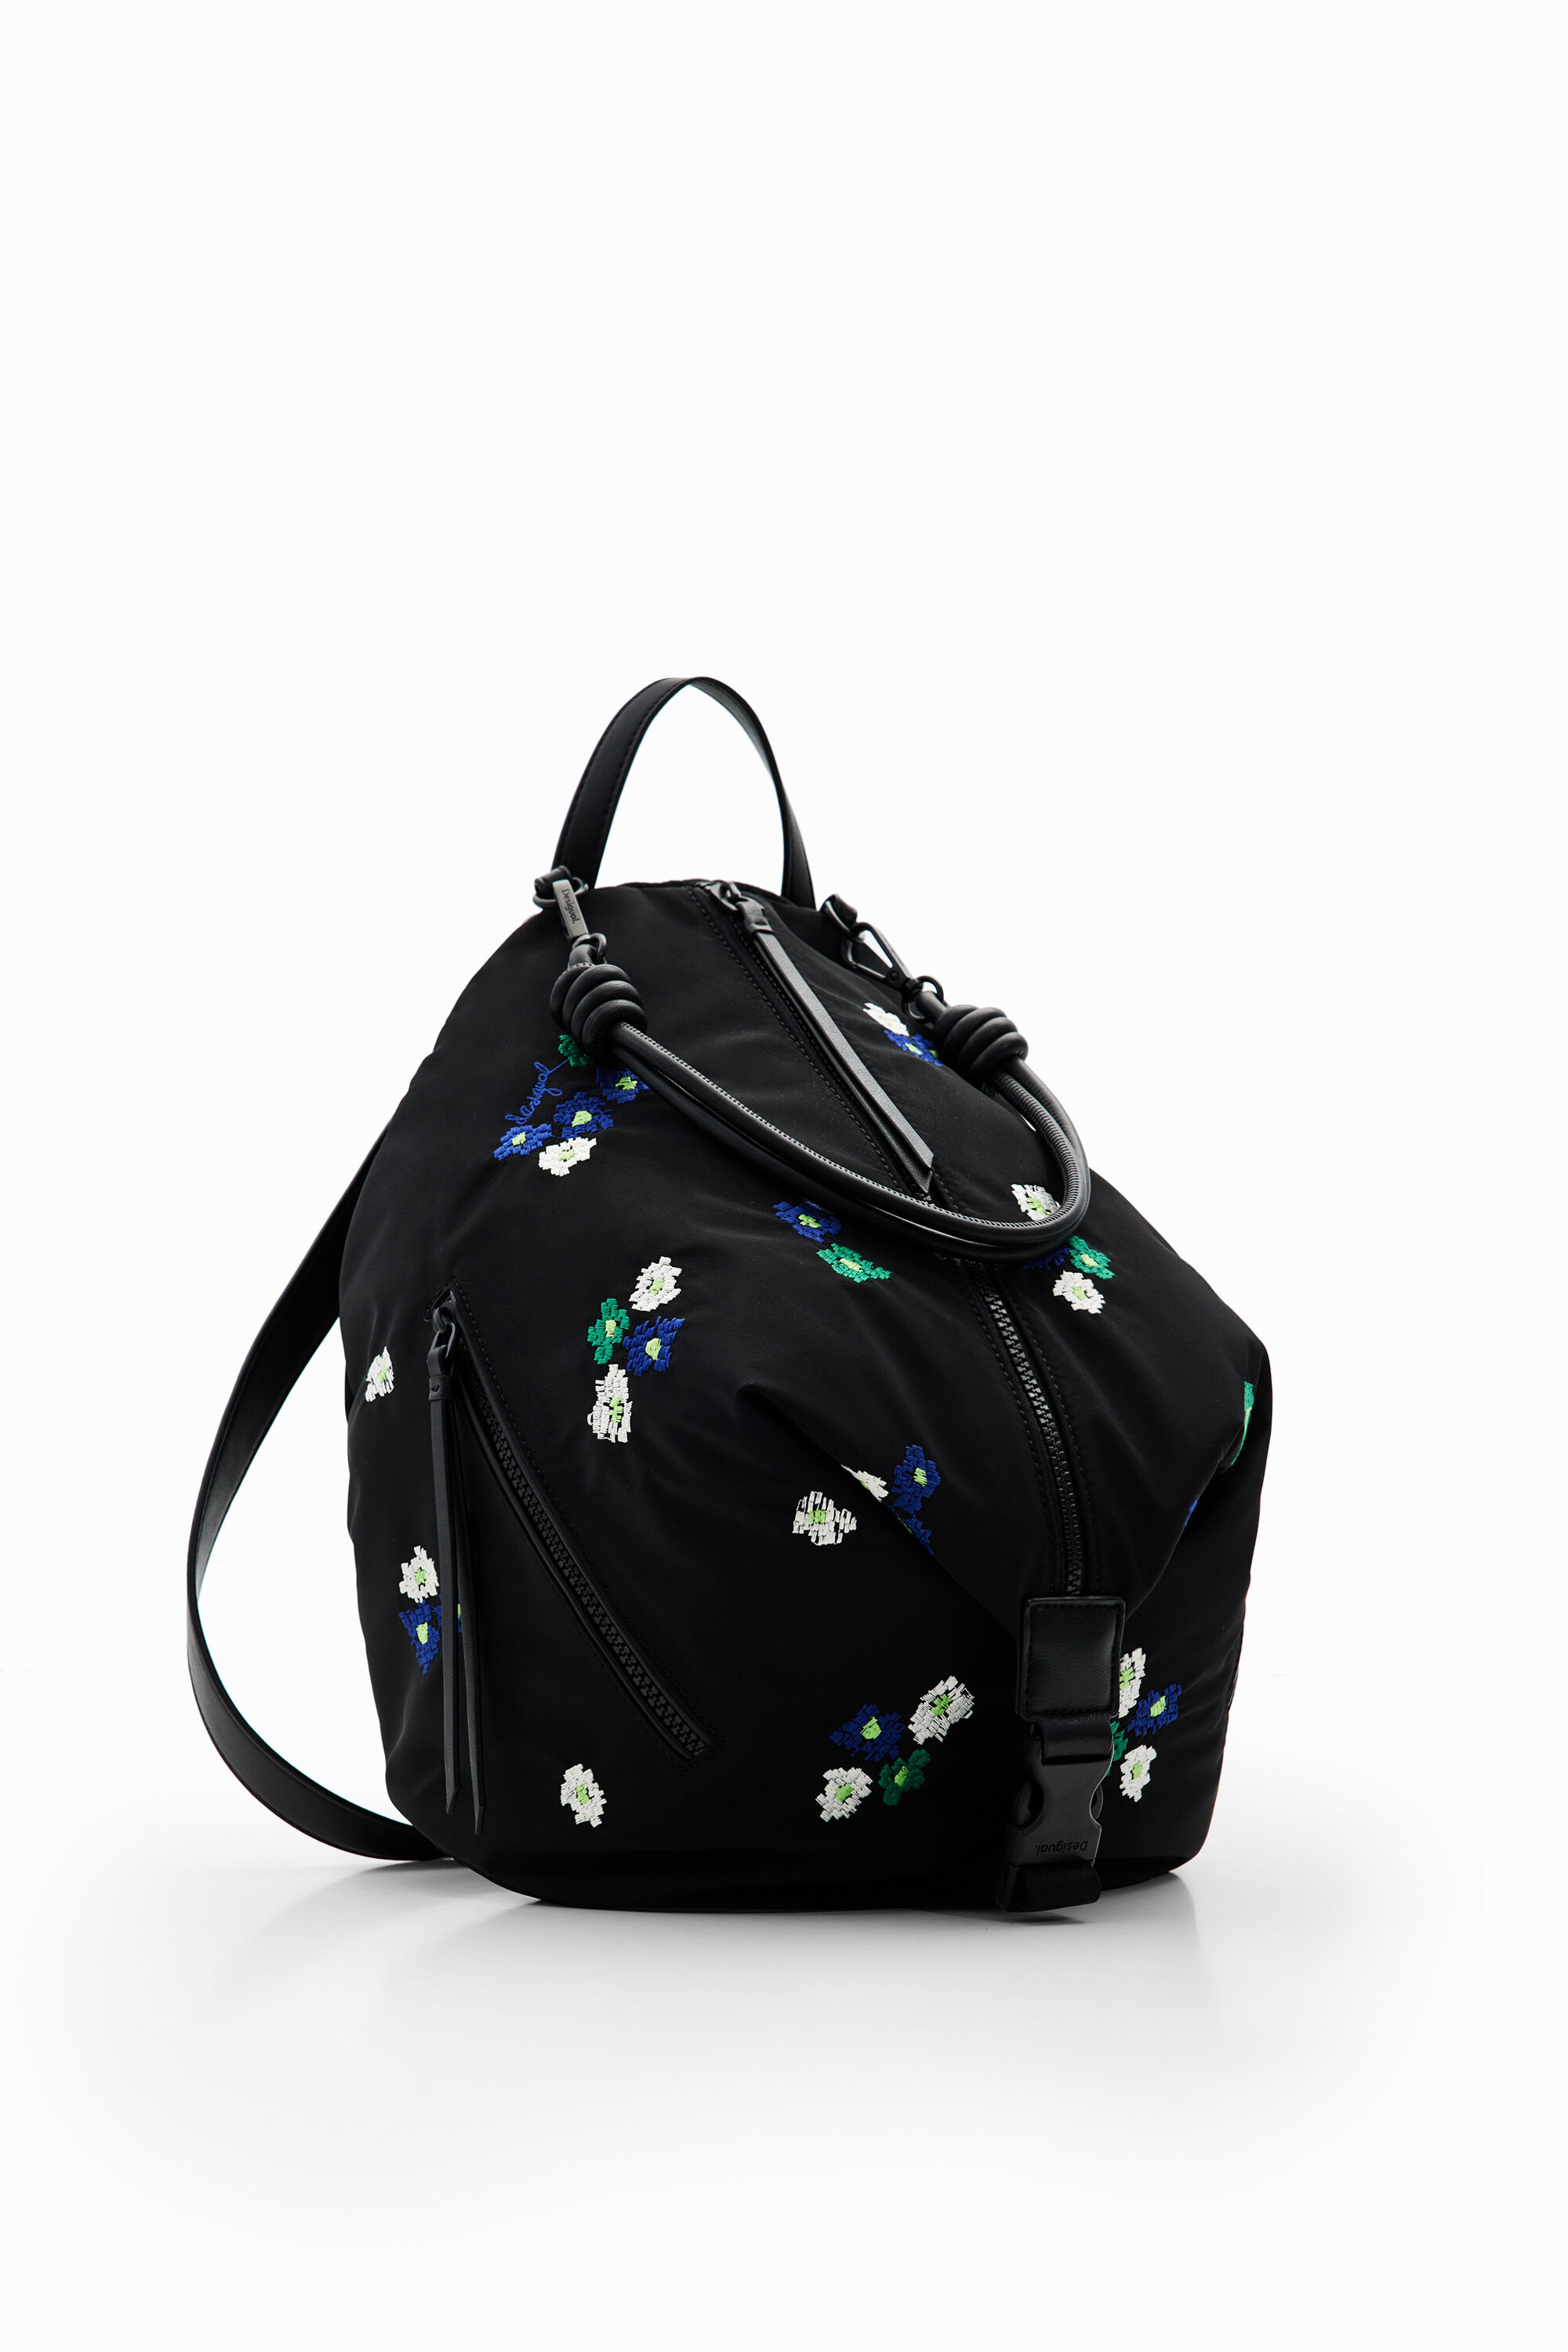 Desigual Midsize multi-position floral backpack